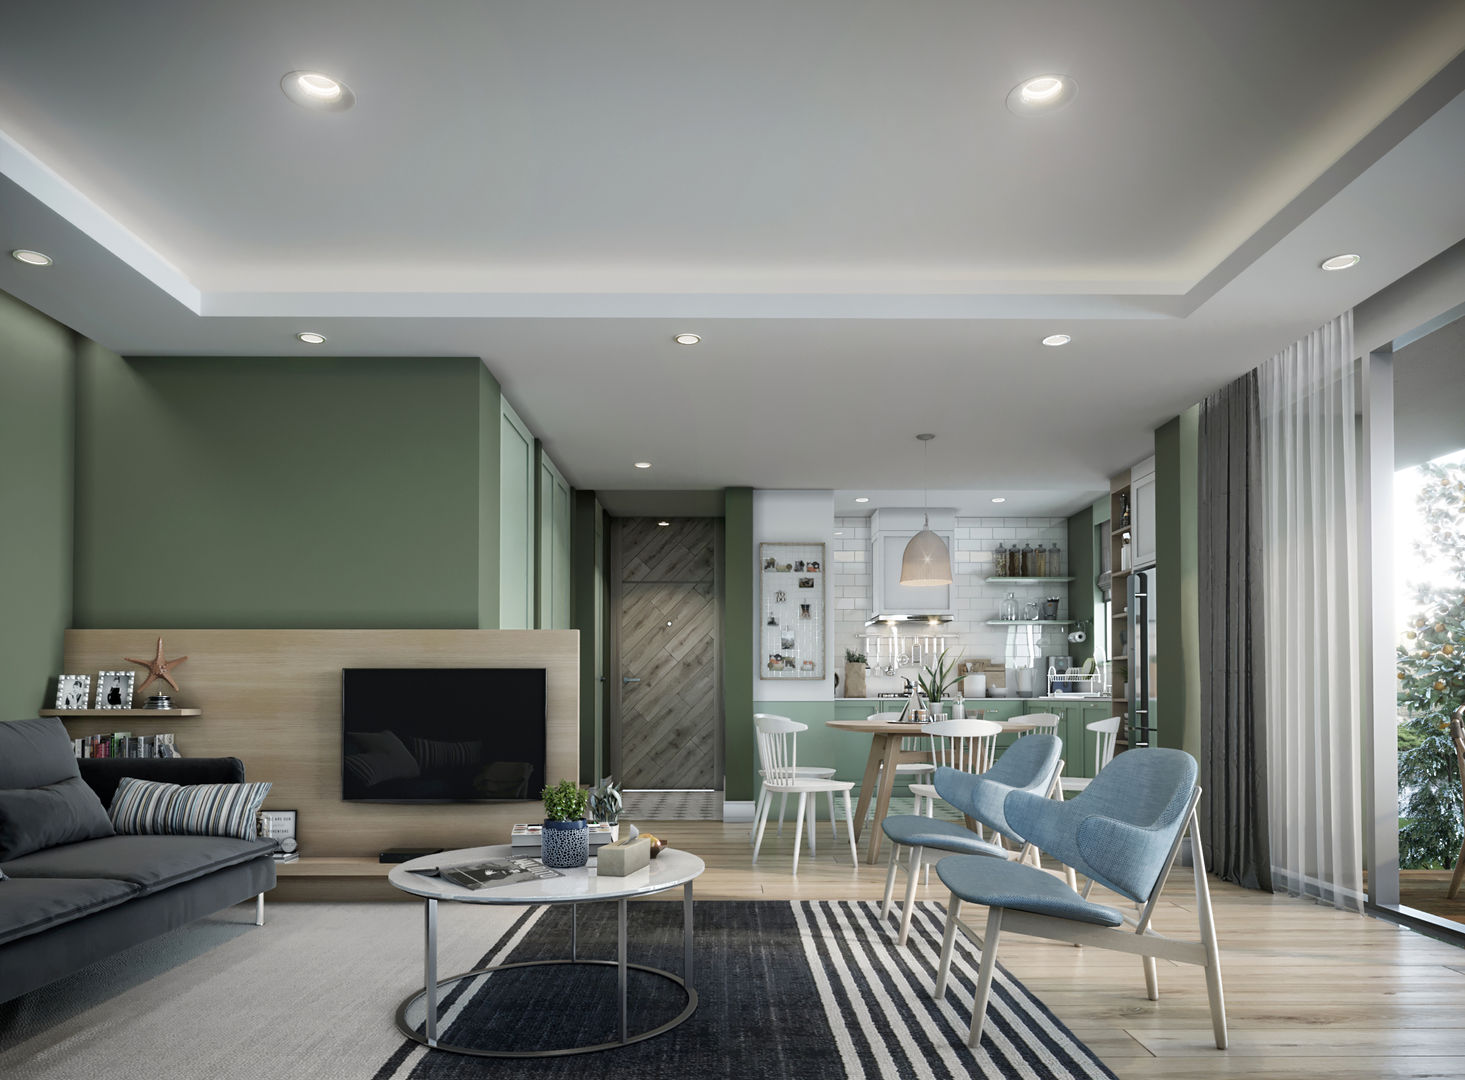 Single Family House - Interior Design, Onur Eroğuz Mimarlık Hizmetleri Onur Eroğuz Mimarlık Hizmetleri Salones escandinavos